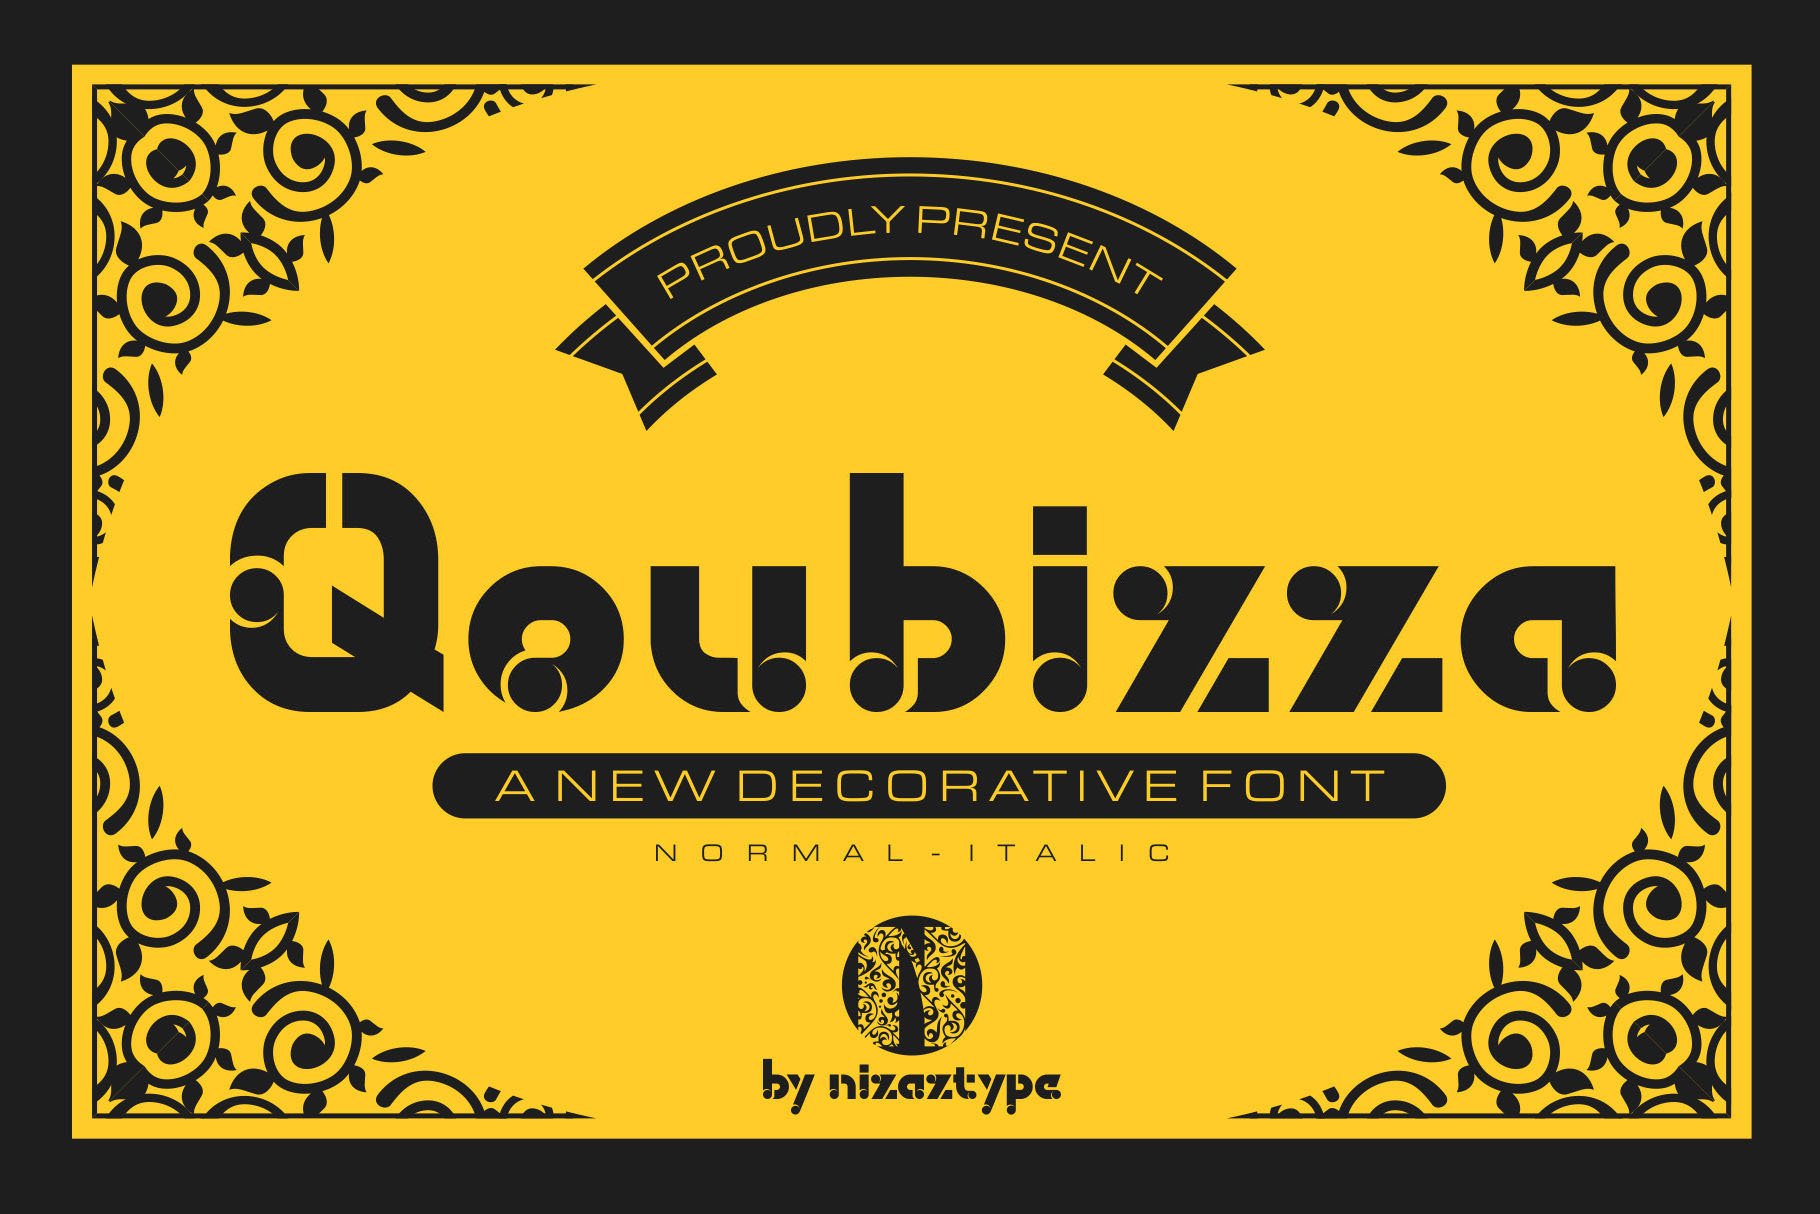 Qoubizza - Decoratiove Font cover image.